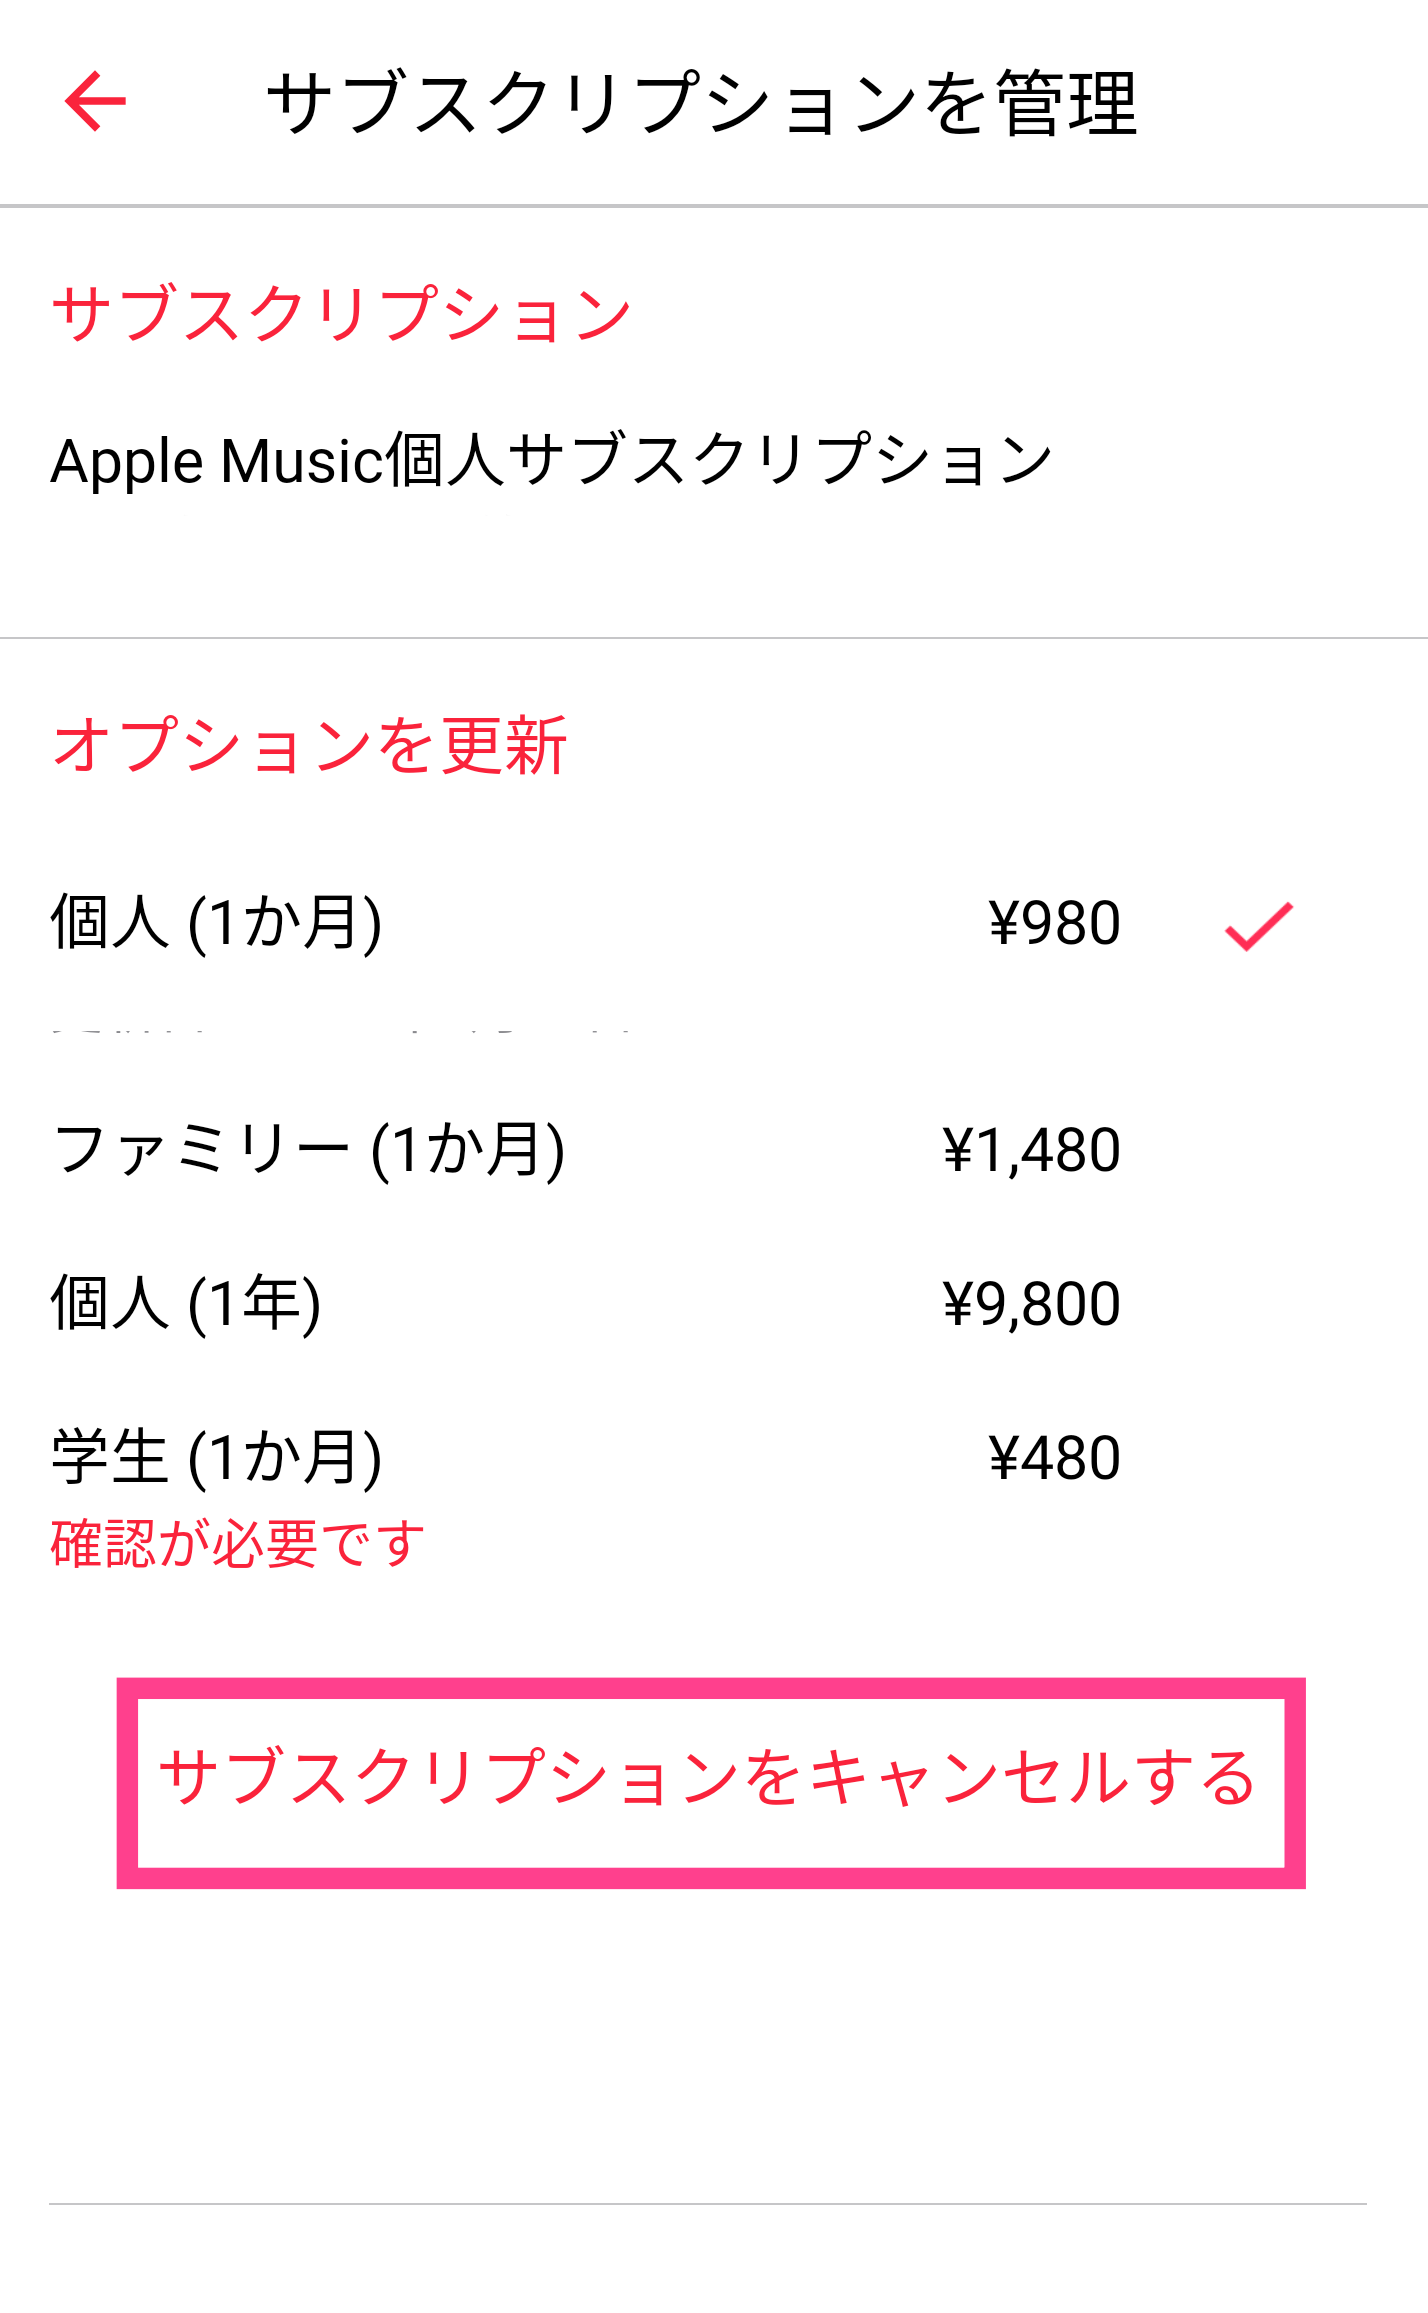 Apple-Musicアプリから解約